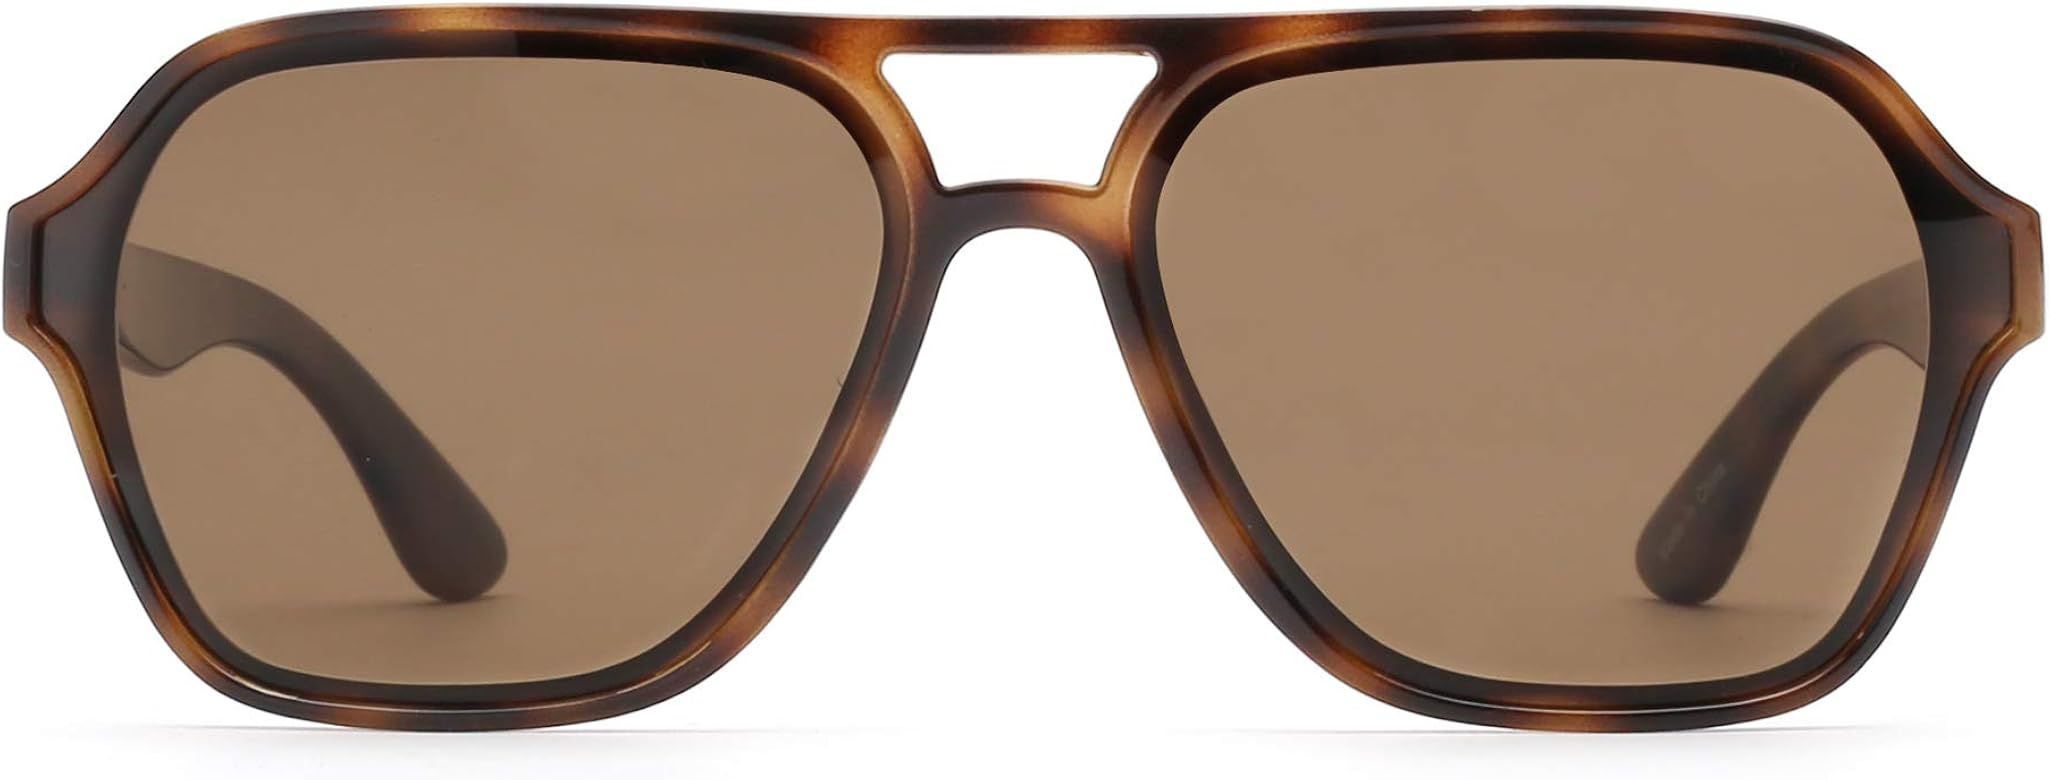 GLINDAR Polarized Aviator Sunglasses Men Women Vintage Square Driving Glasses | Amazon (US)